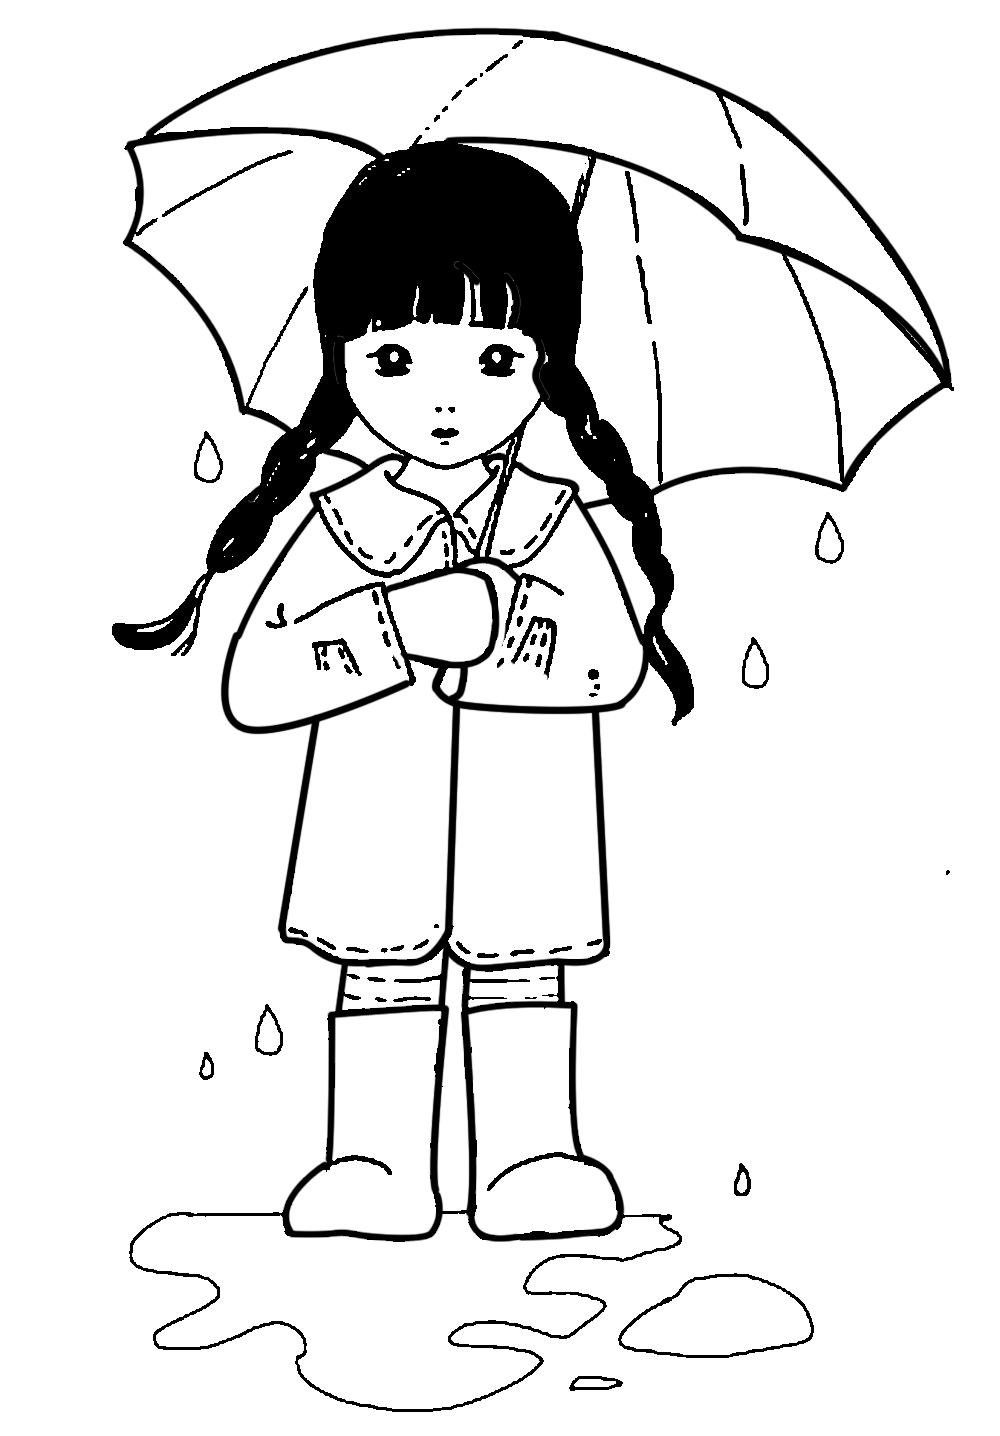 clipart girl with umbrella - photo #17